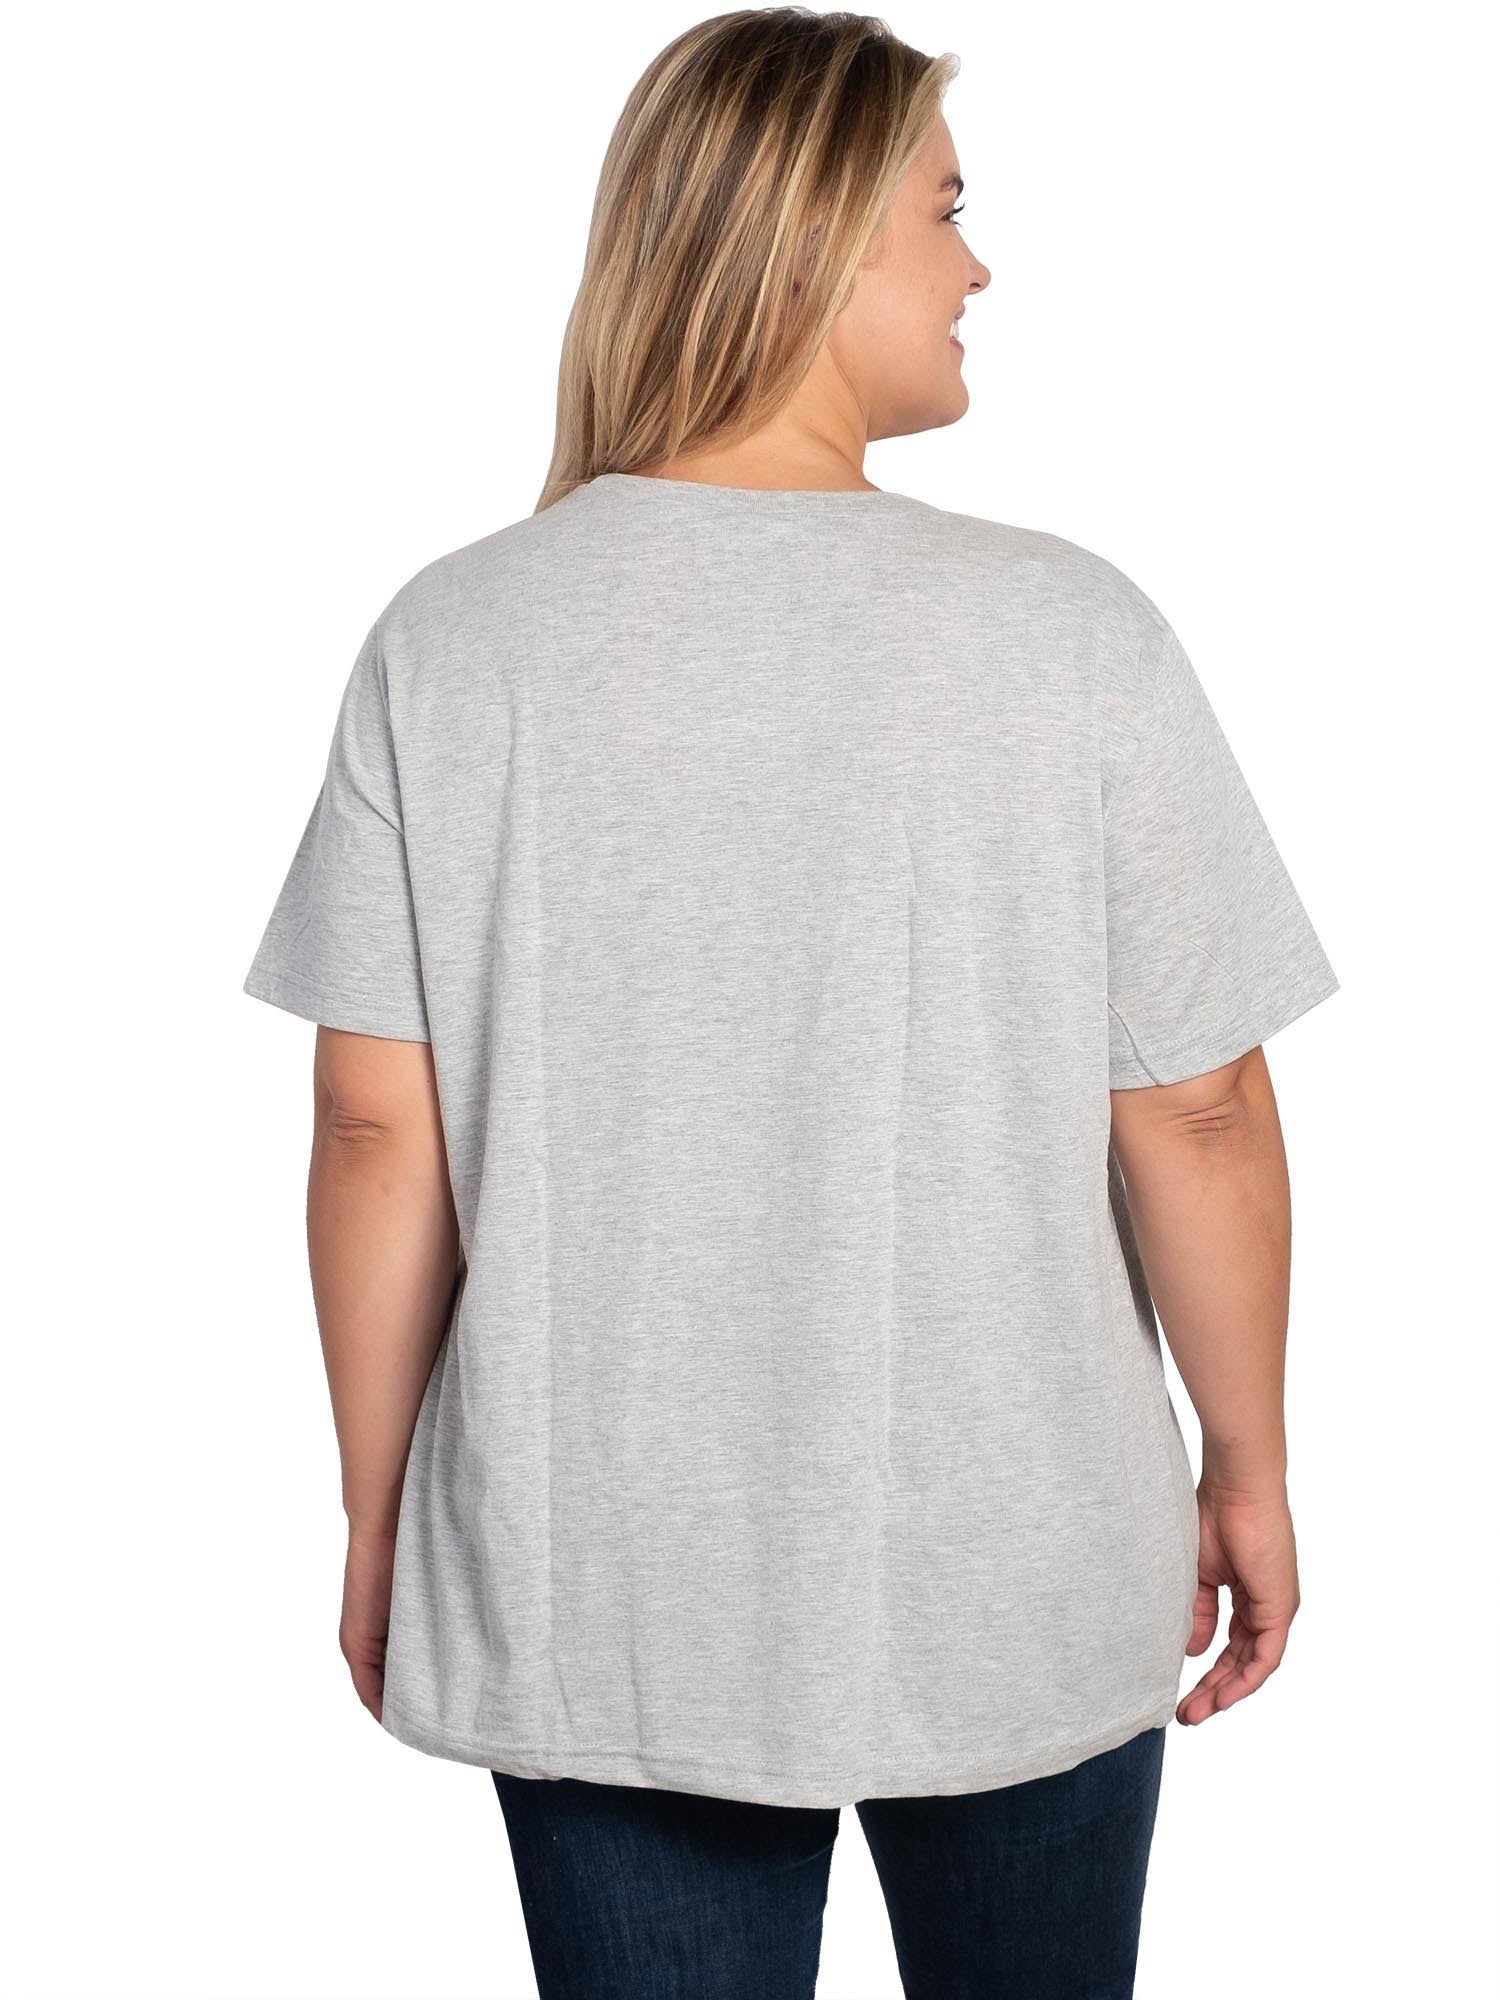 Just Chilling Eeyore T-Shirt w/ Watercolor Lounge Pants Women's Plus Size Set